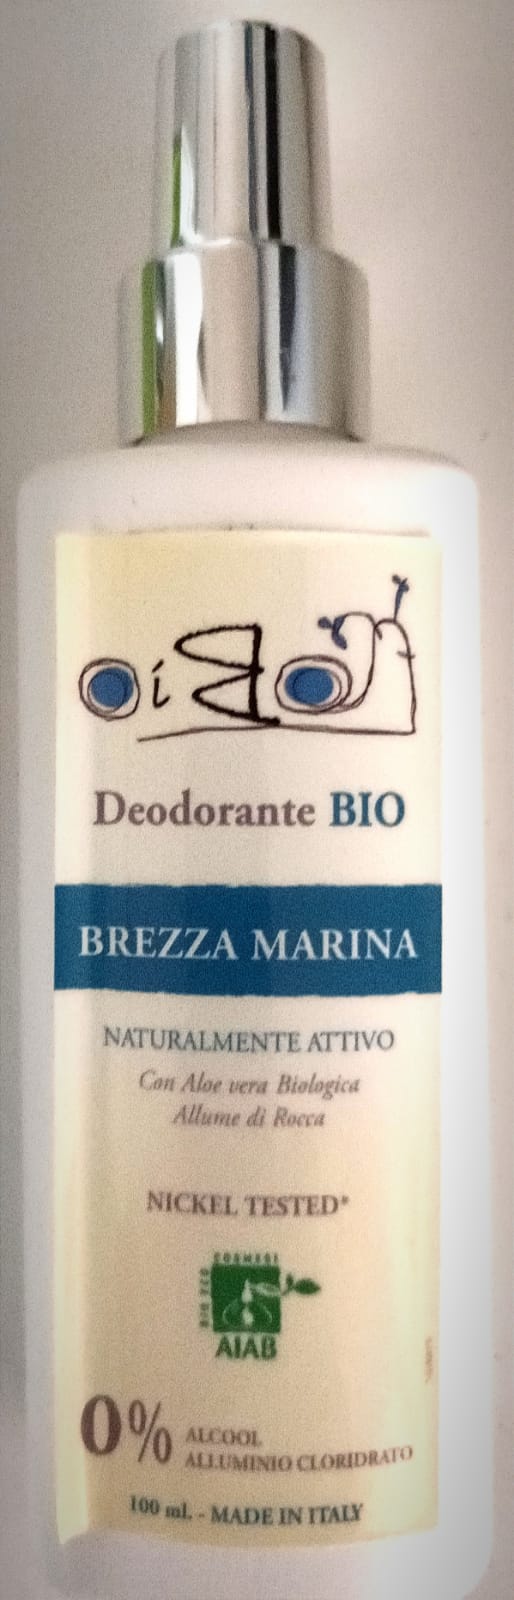 oibo-bio-profumeria_deodorante-spray_brezza-marina_oibo_zeca_labnat